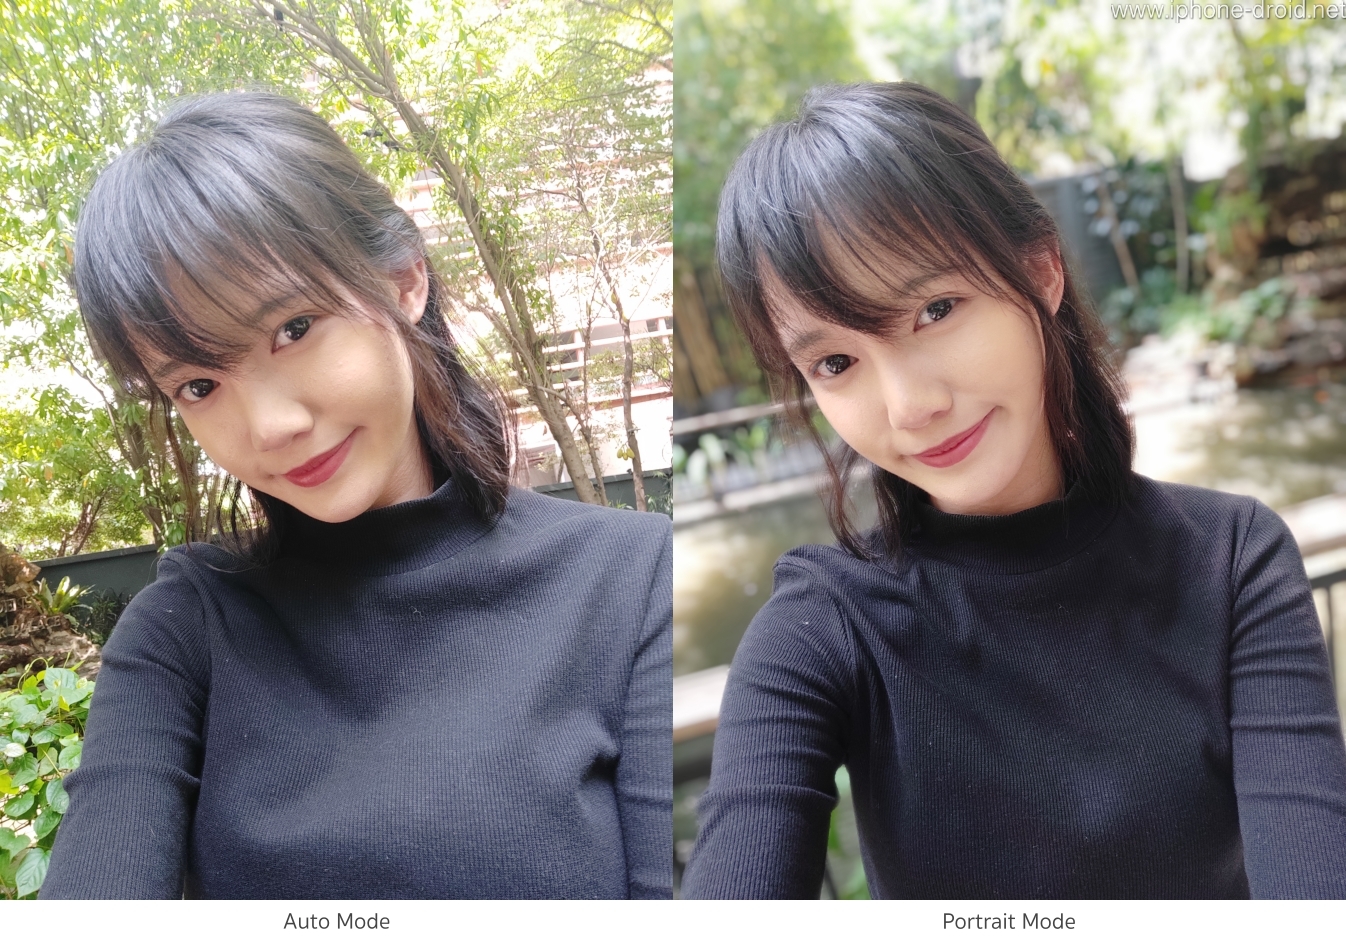 Xiaomi Mi 9 SE camera review